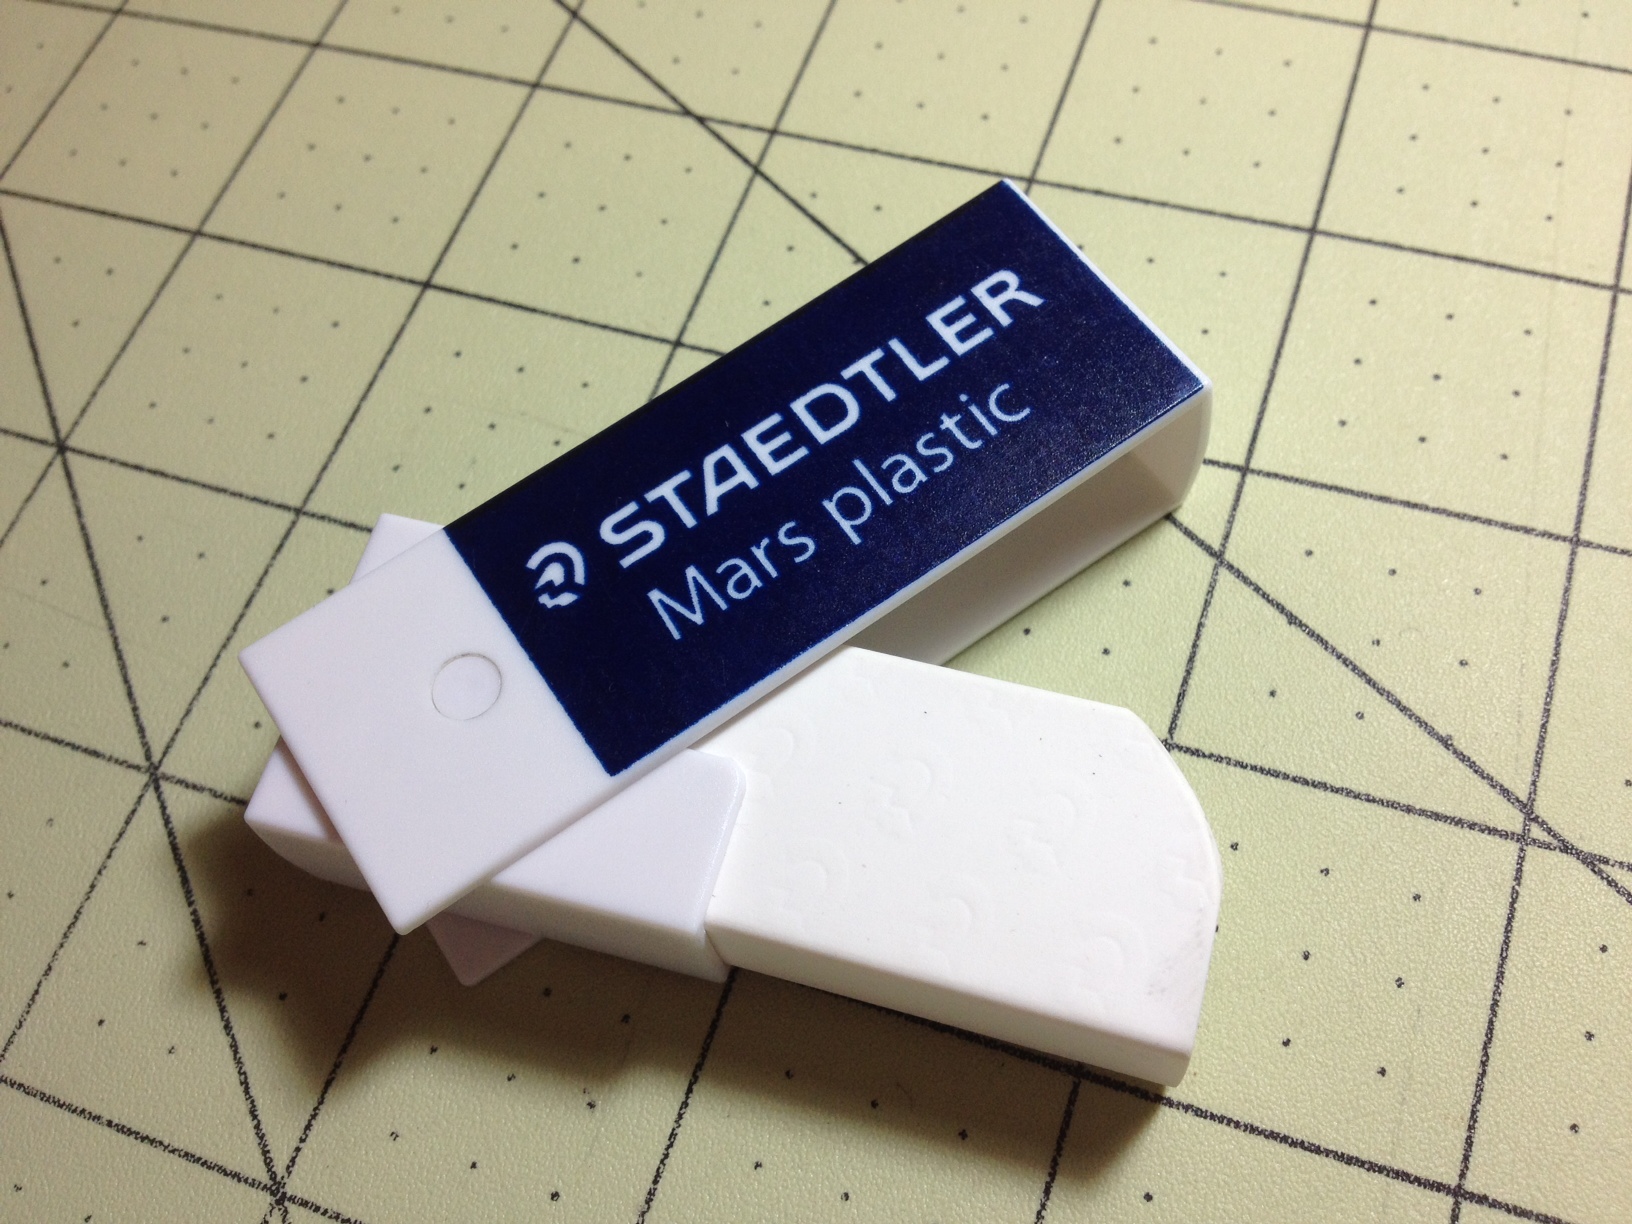 Magic rub eraser white each Brand: Sanford, Pala Supply Company